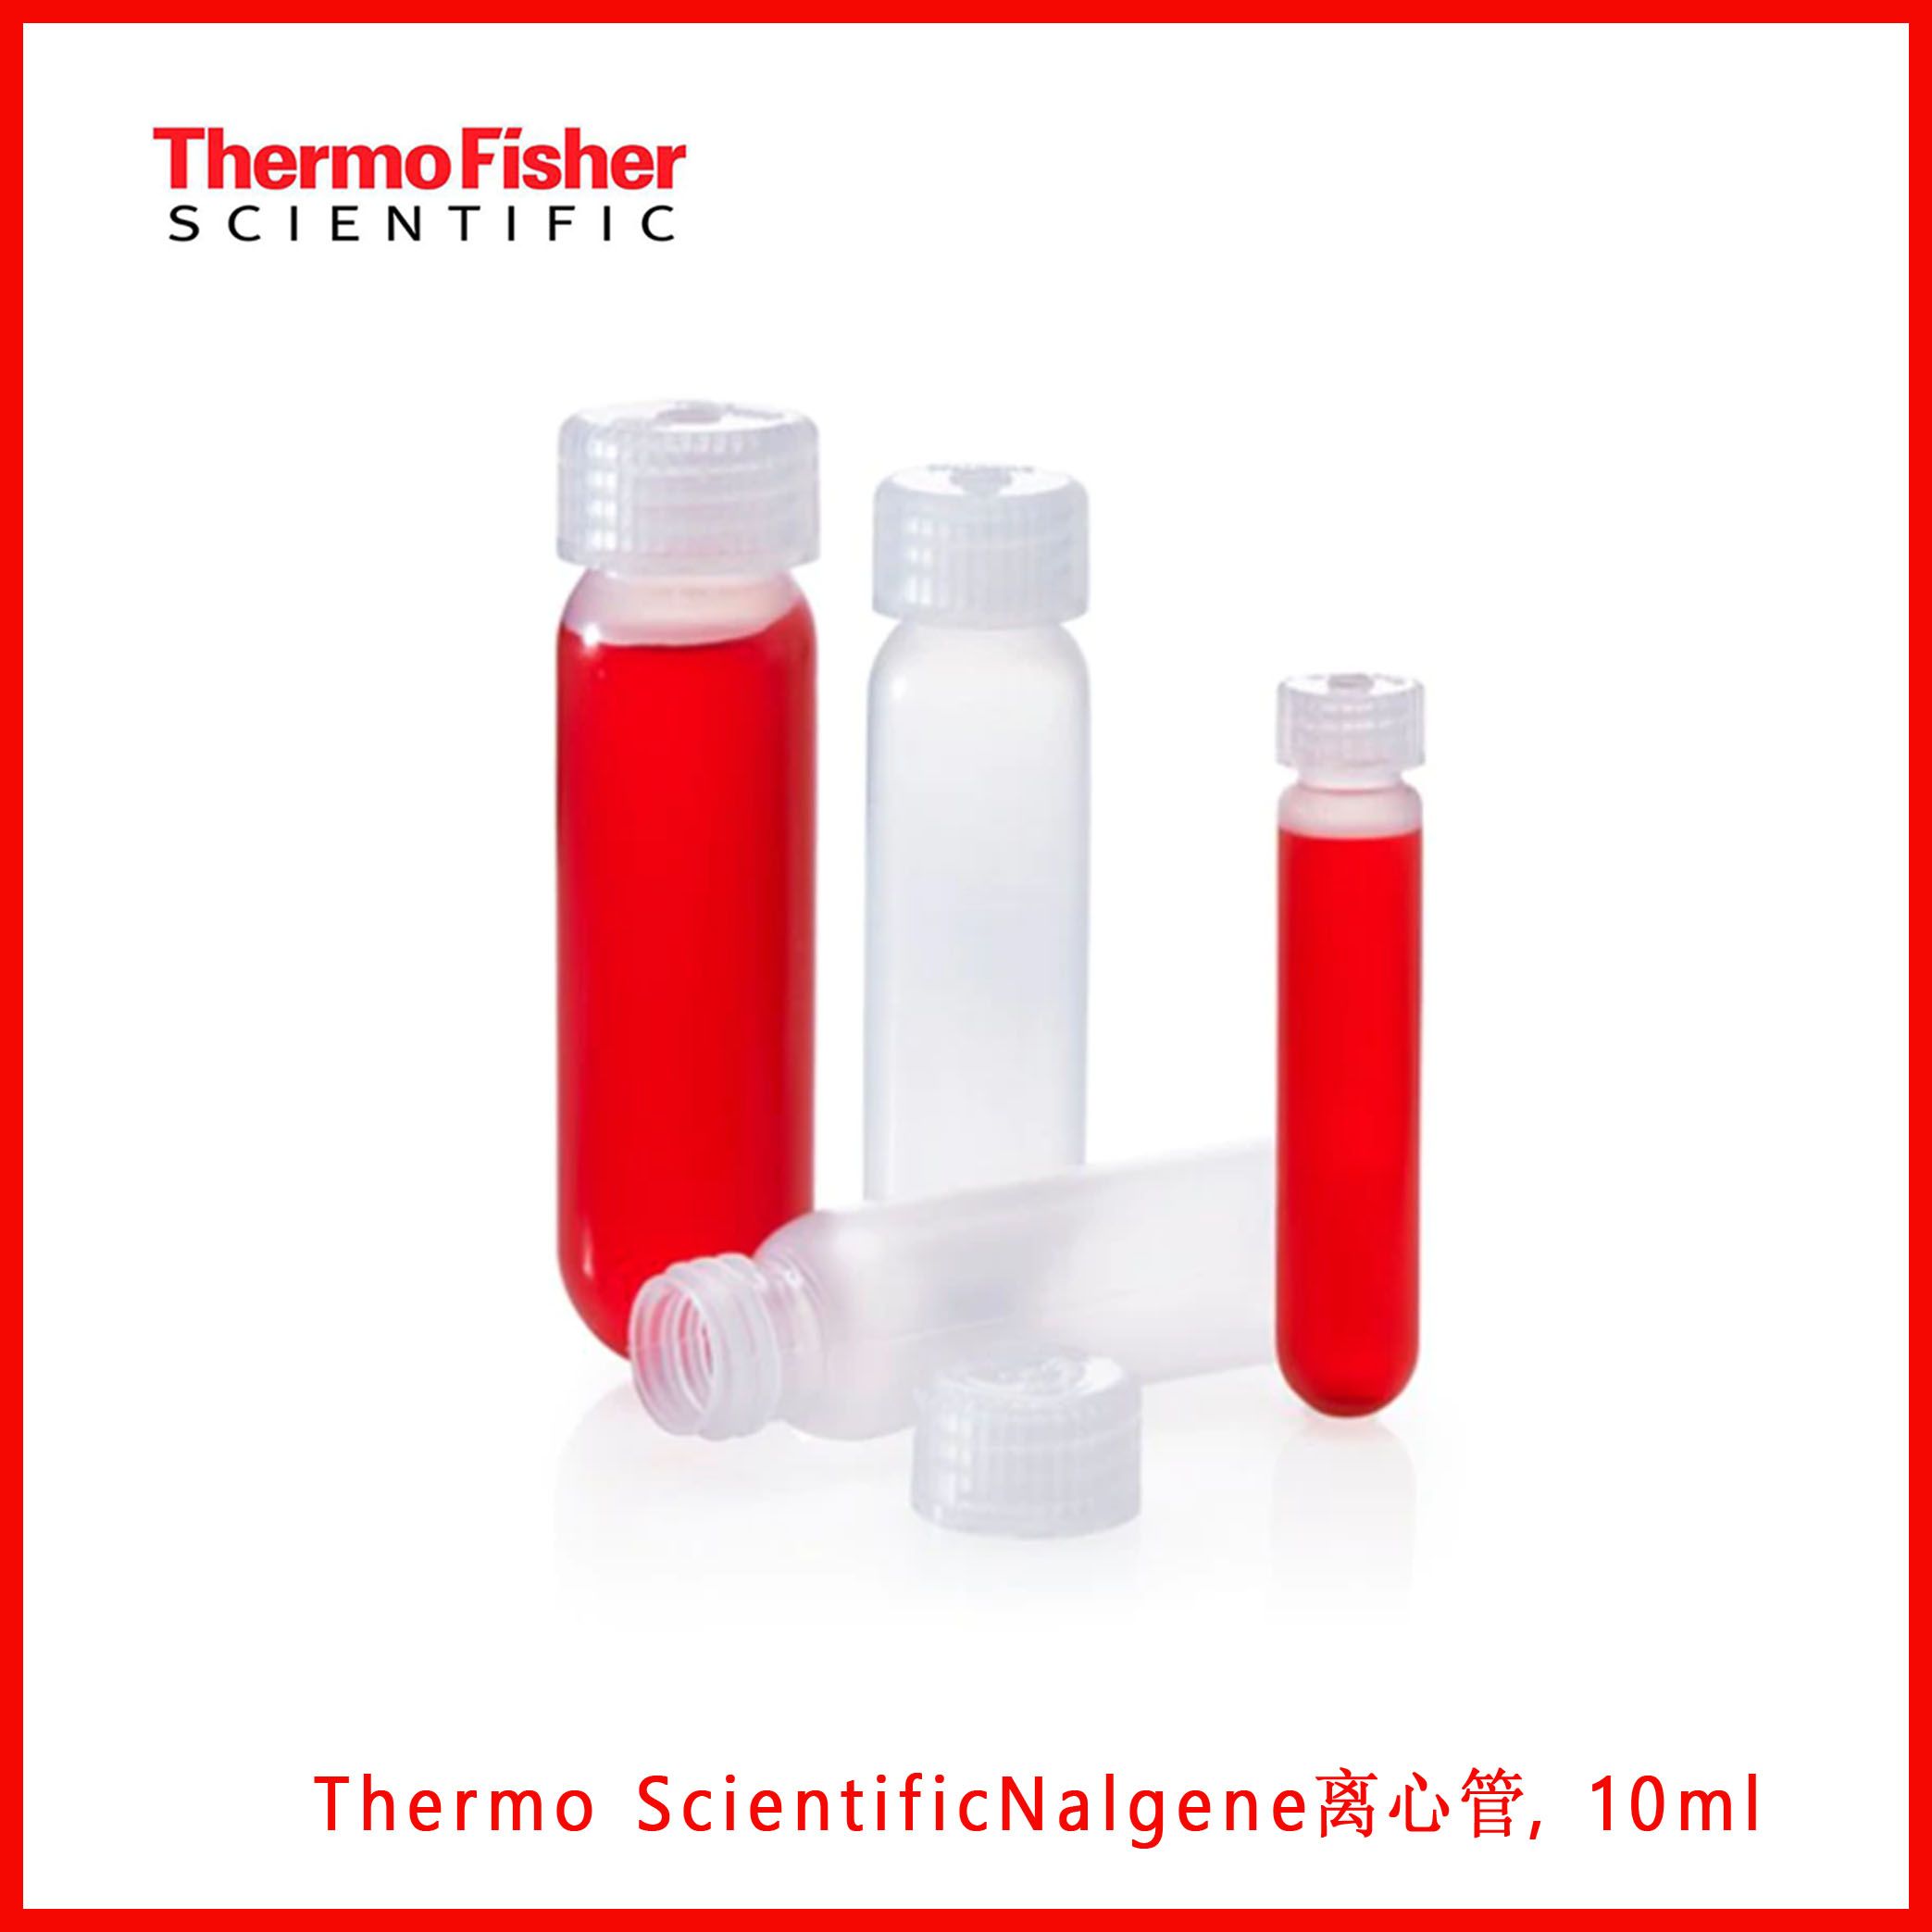 Thermo ScientificNalgene离心管, 10ml；PPCO材质；16.0x81.4mm；离心力